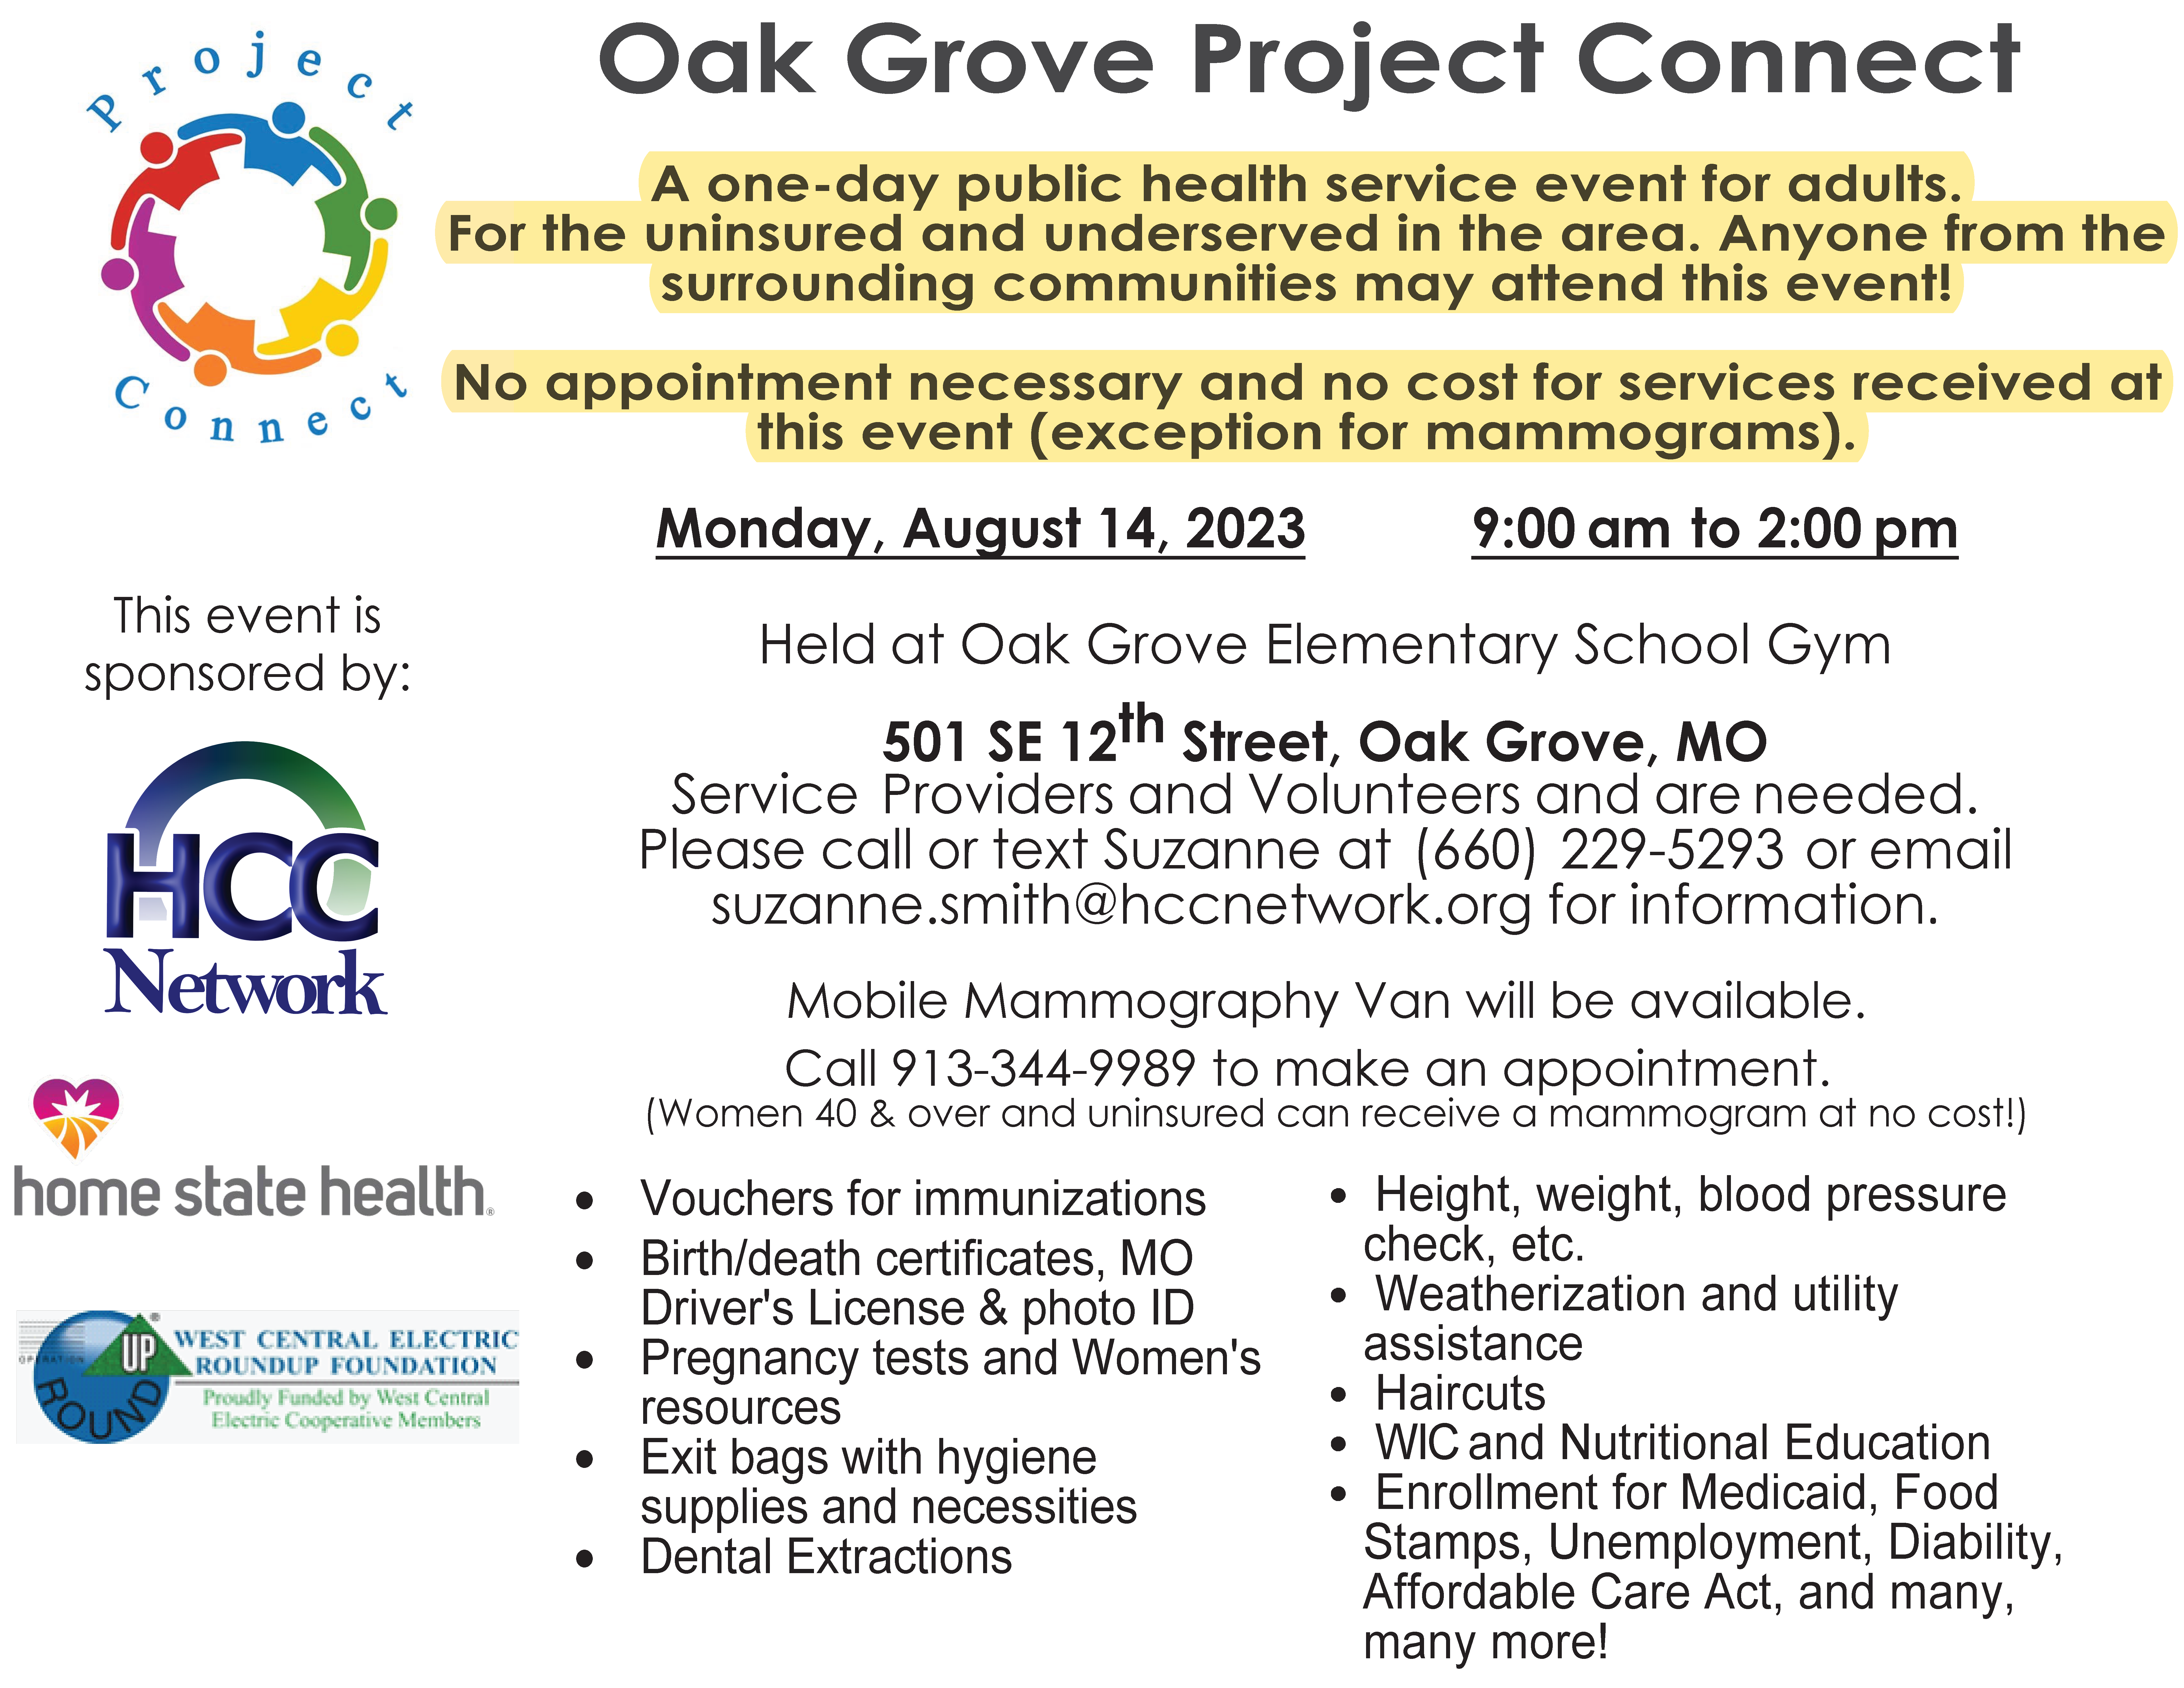 HCC Project Connect @ Oak Grove Elementary School Gym